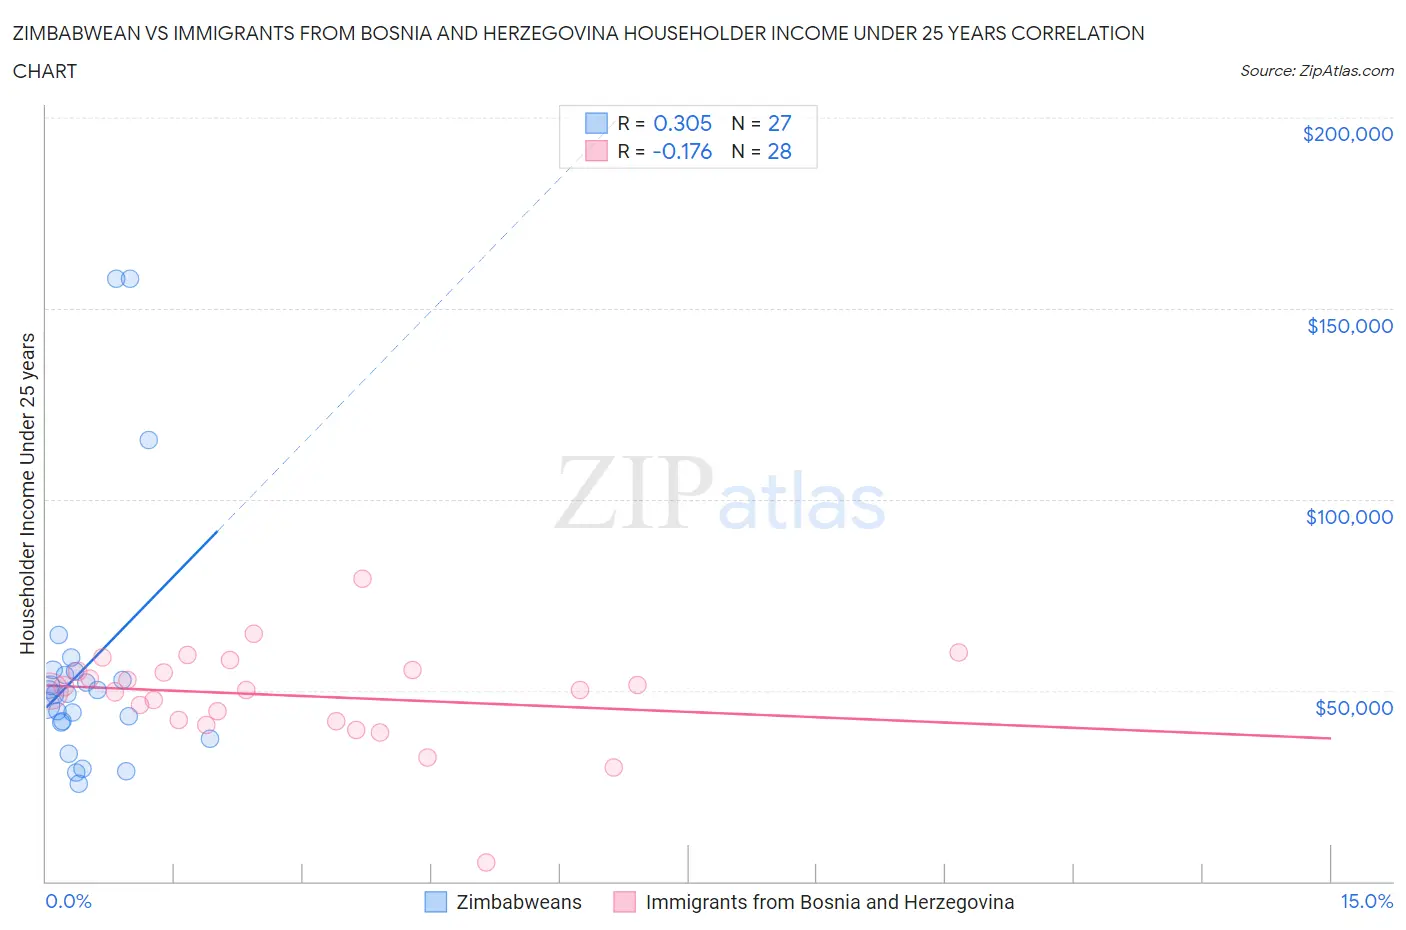 Zimbabwean vs Immigrants from Bosnia and Herzegovina Householder Income Under 25 years